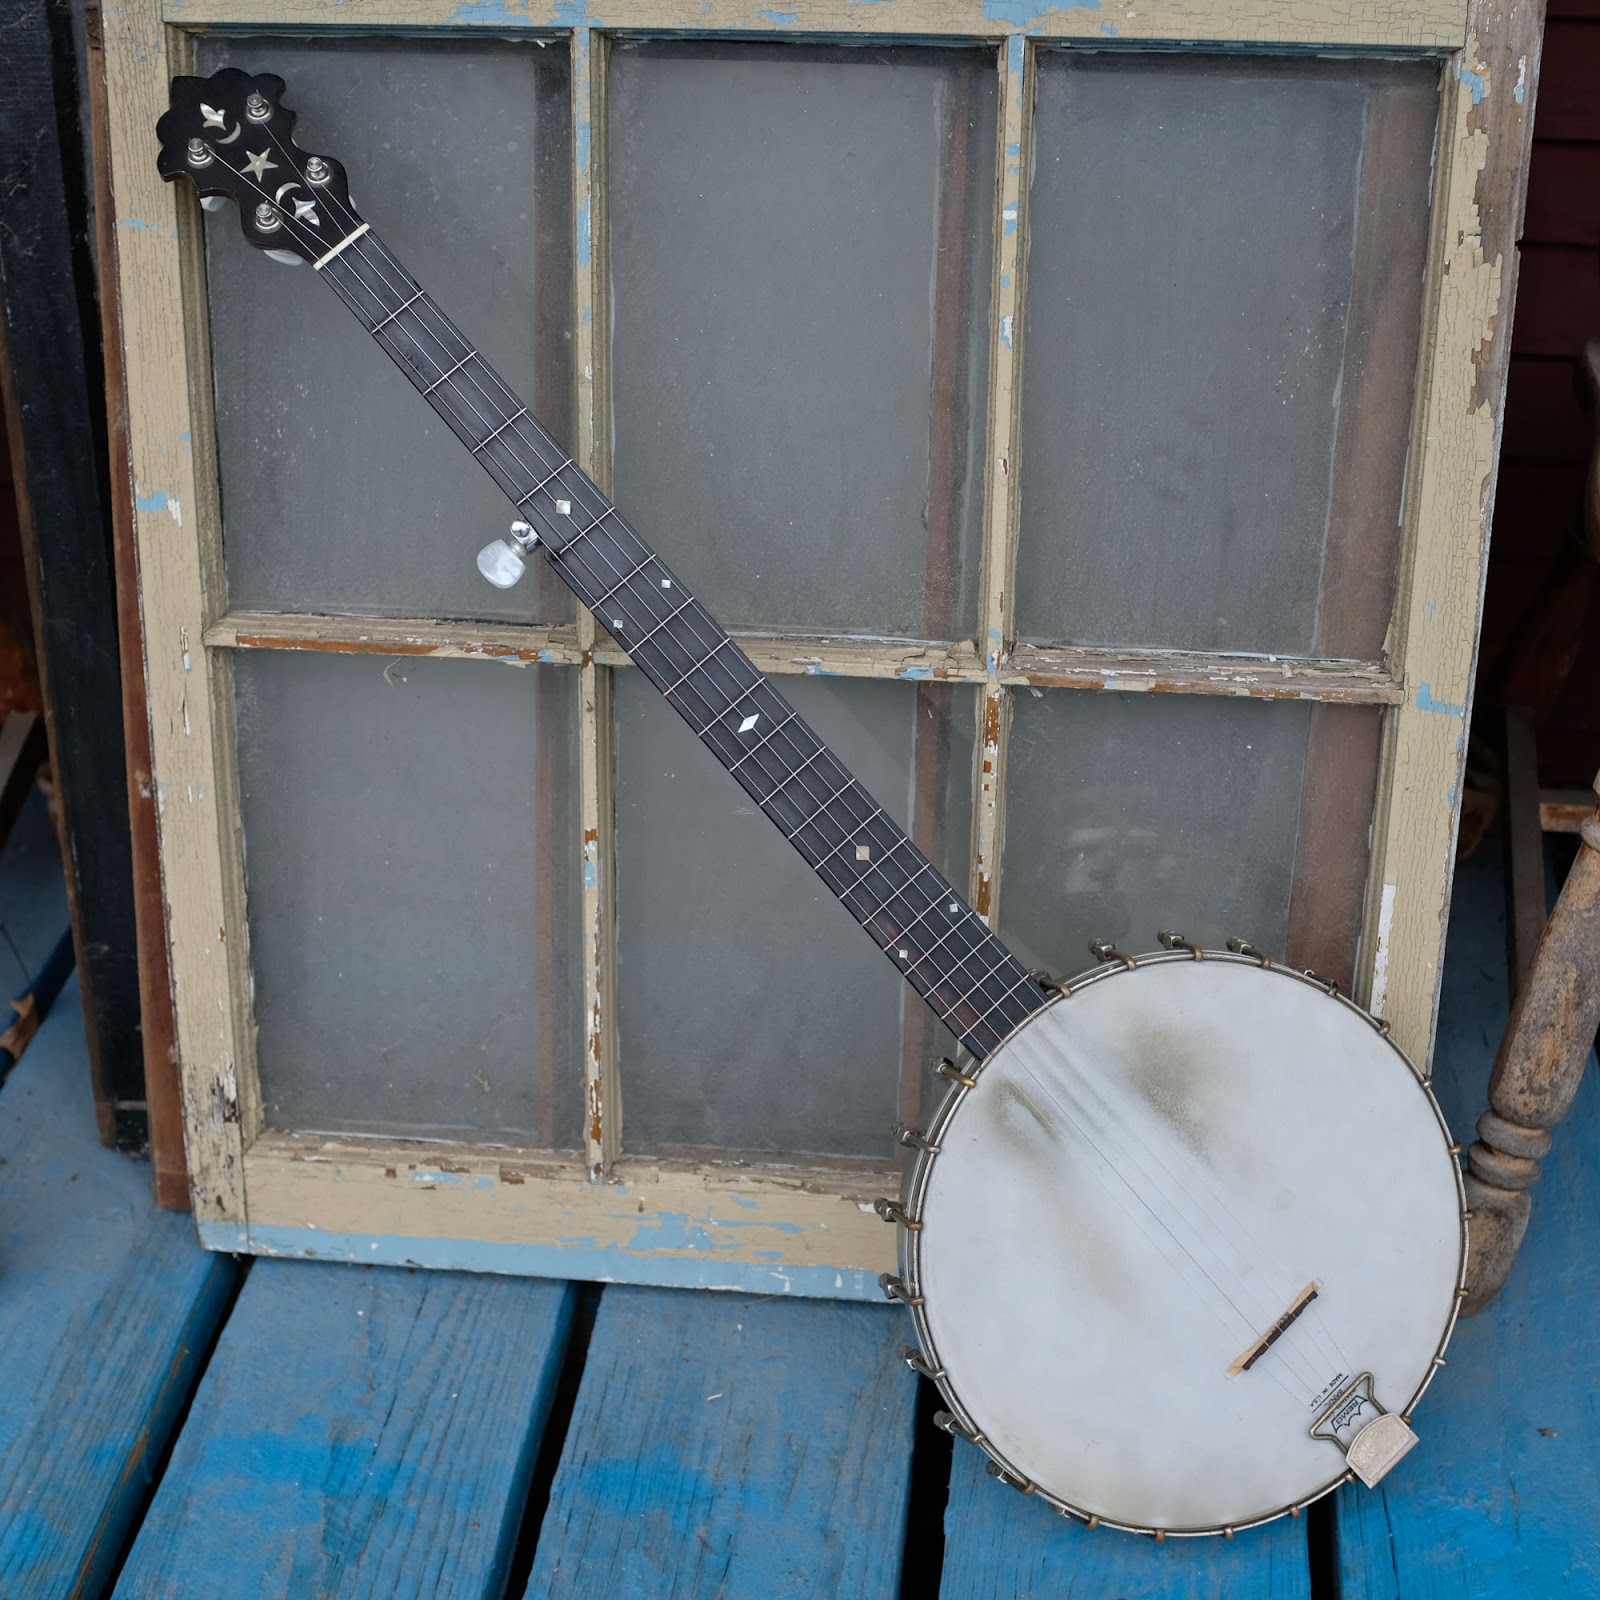 Popularity Of The 5-String Banjo